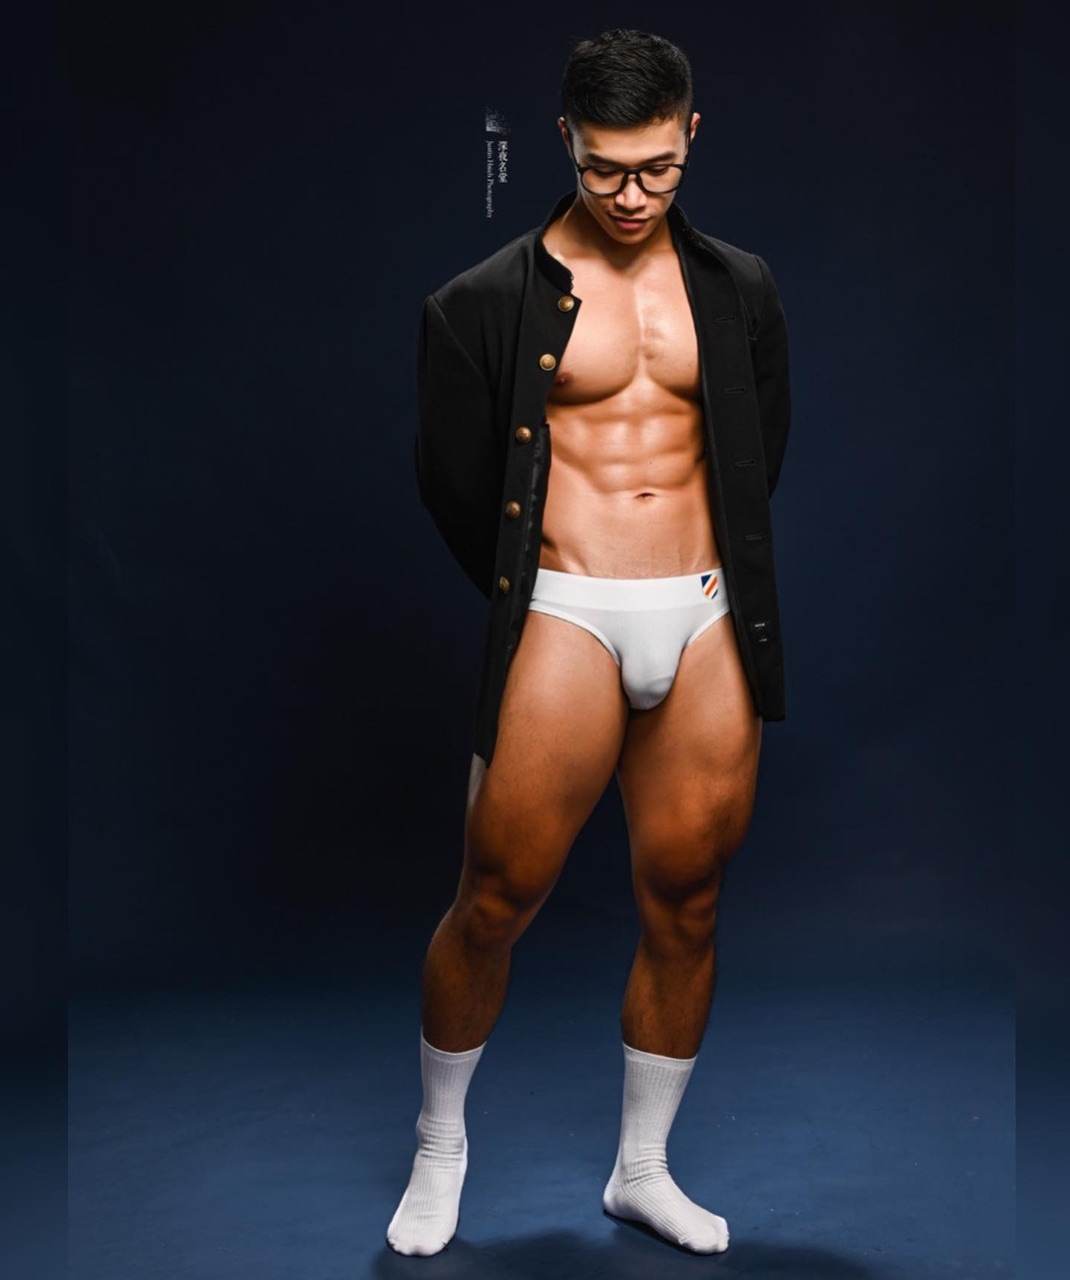 Hot men in underwear 608